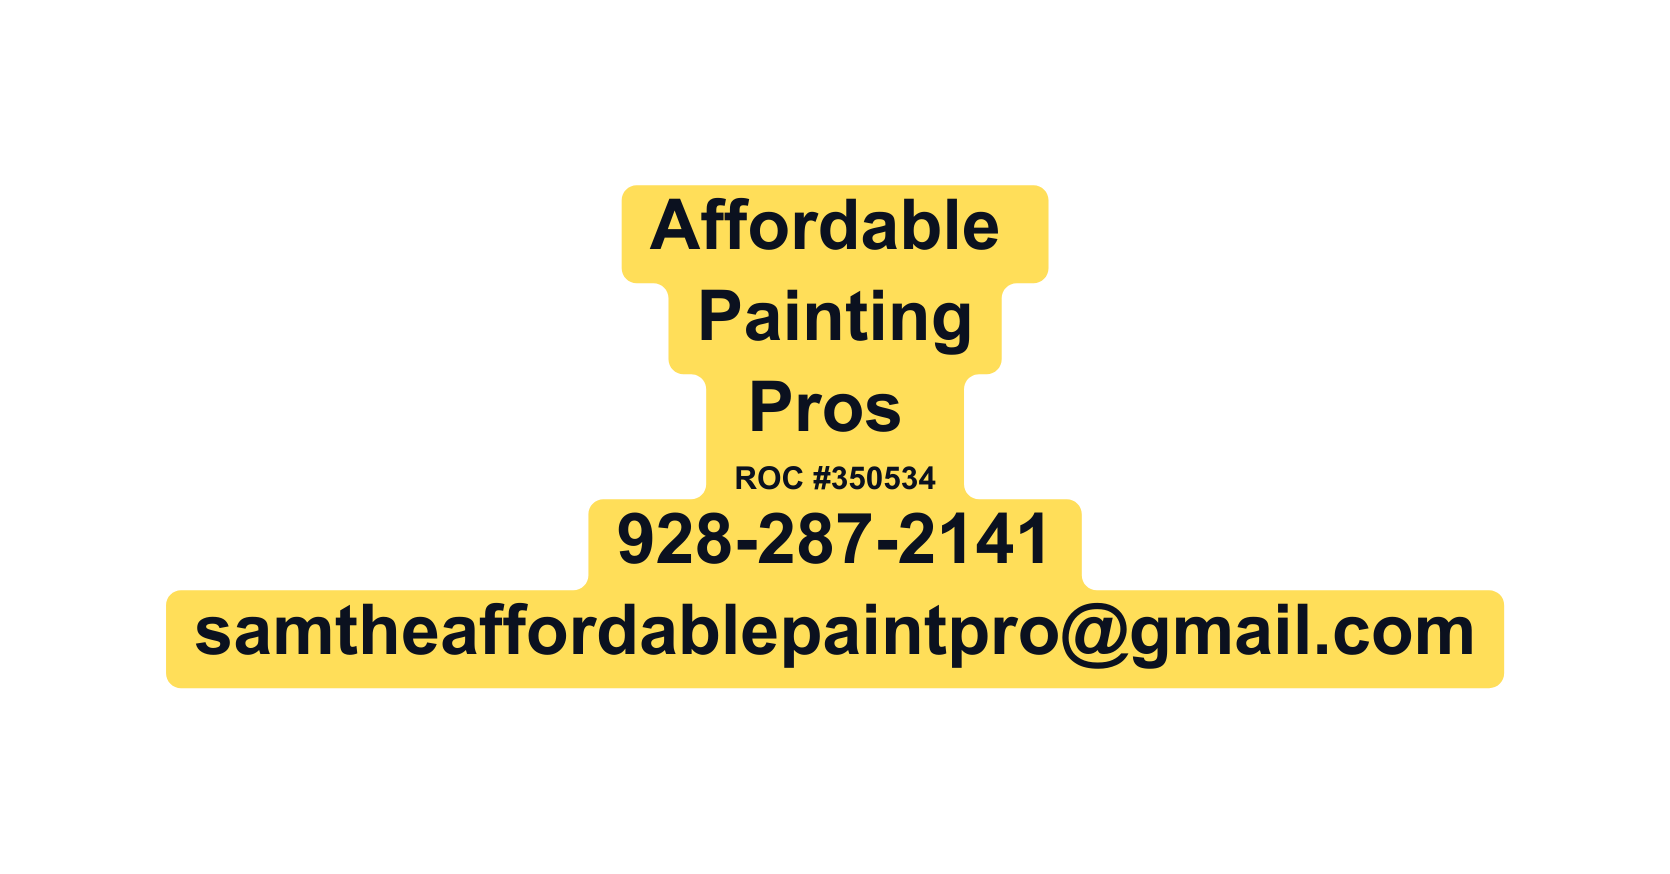 Affordable Painting Pros ROC 350534 928 287 2141 samtheaffordablepaintpro gmail com